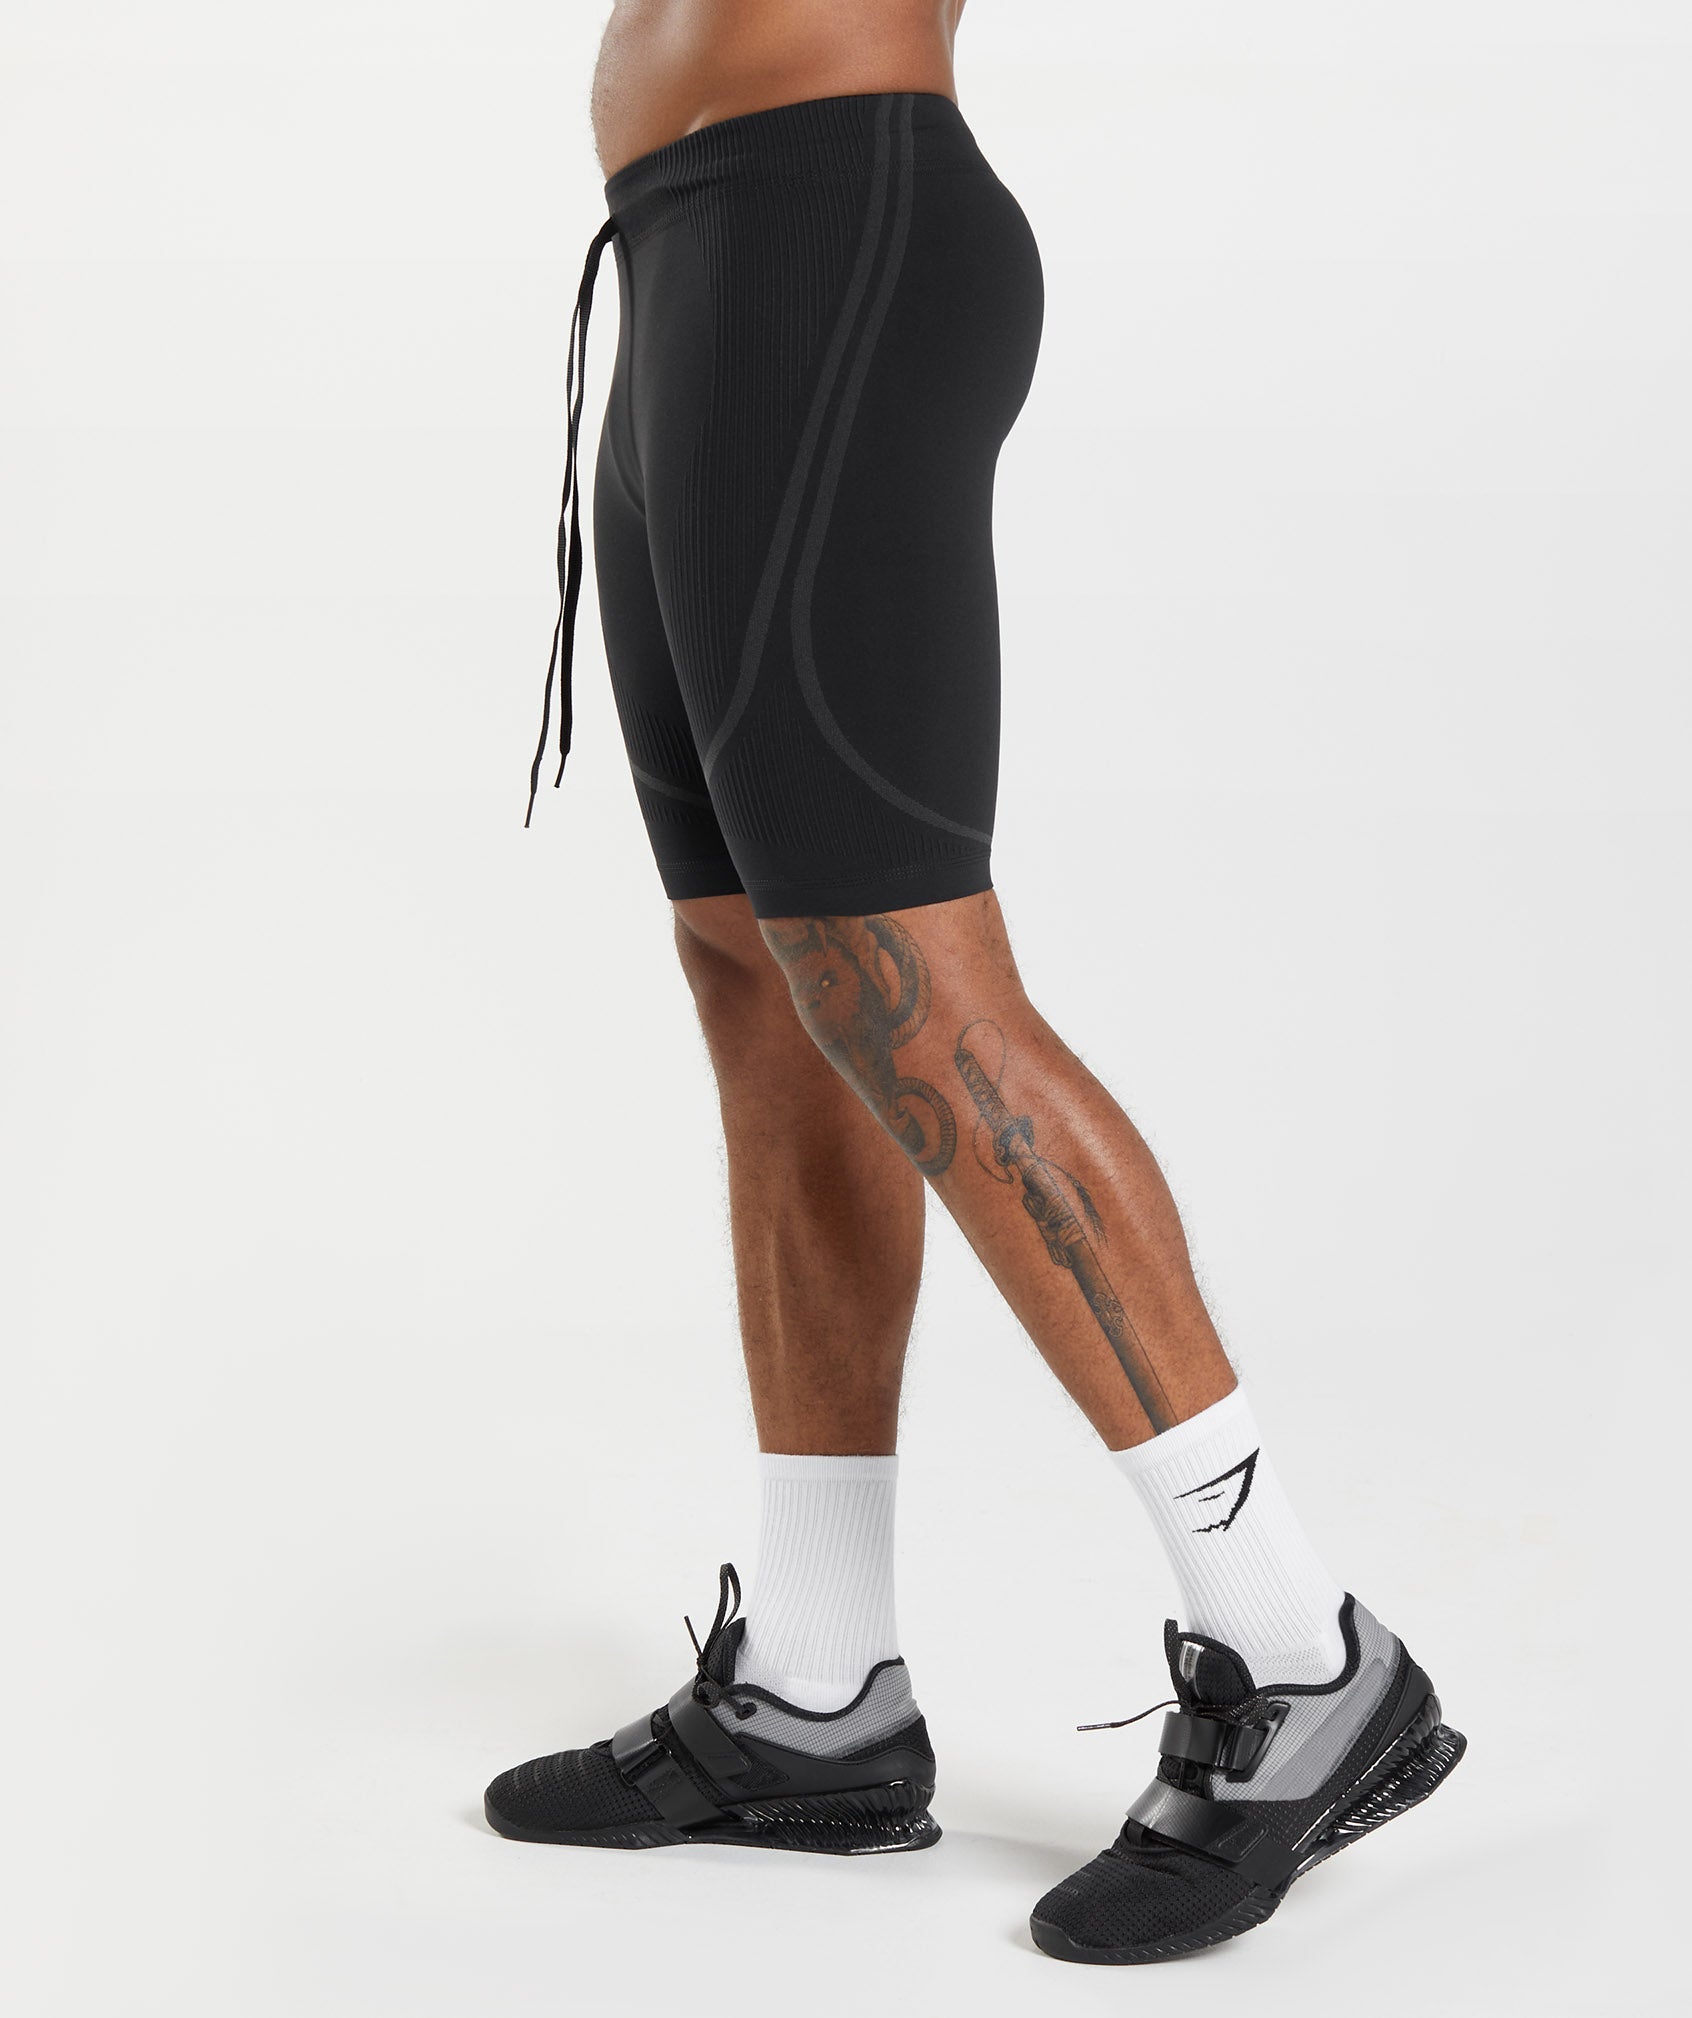 Gymshark Vital Seamless Shorts Gray Size M - $24 (40% Off Retail